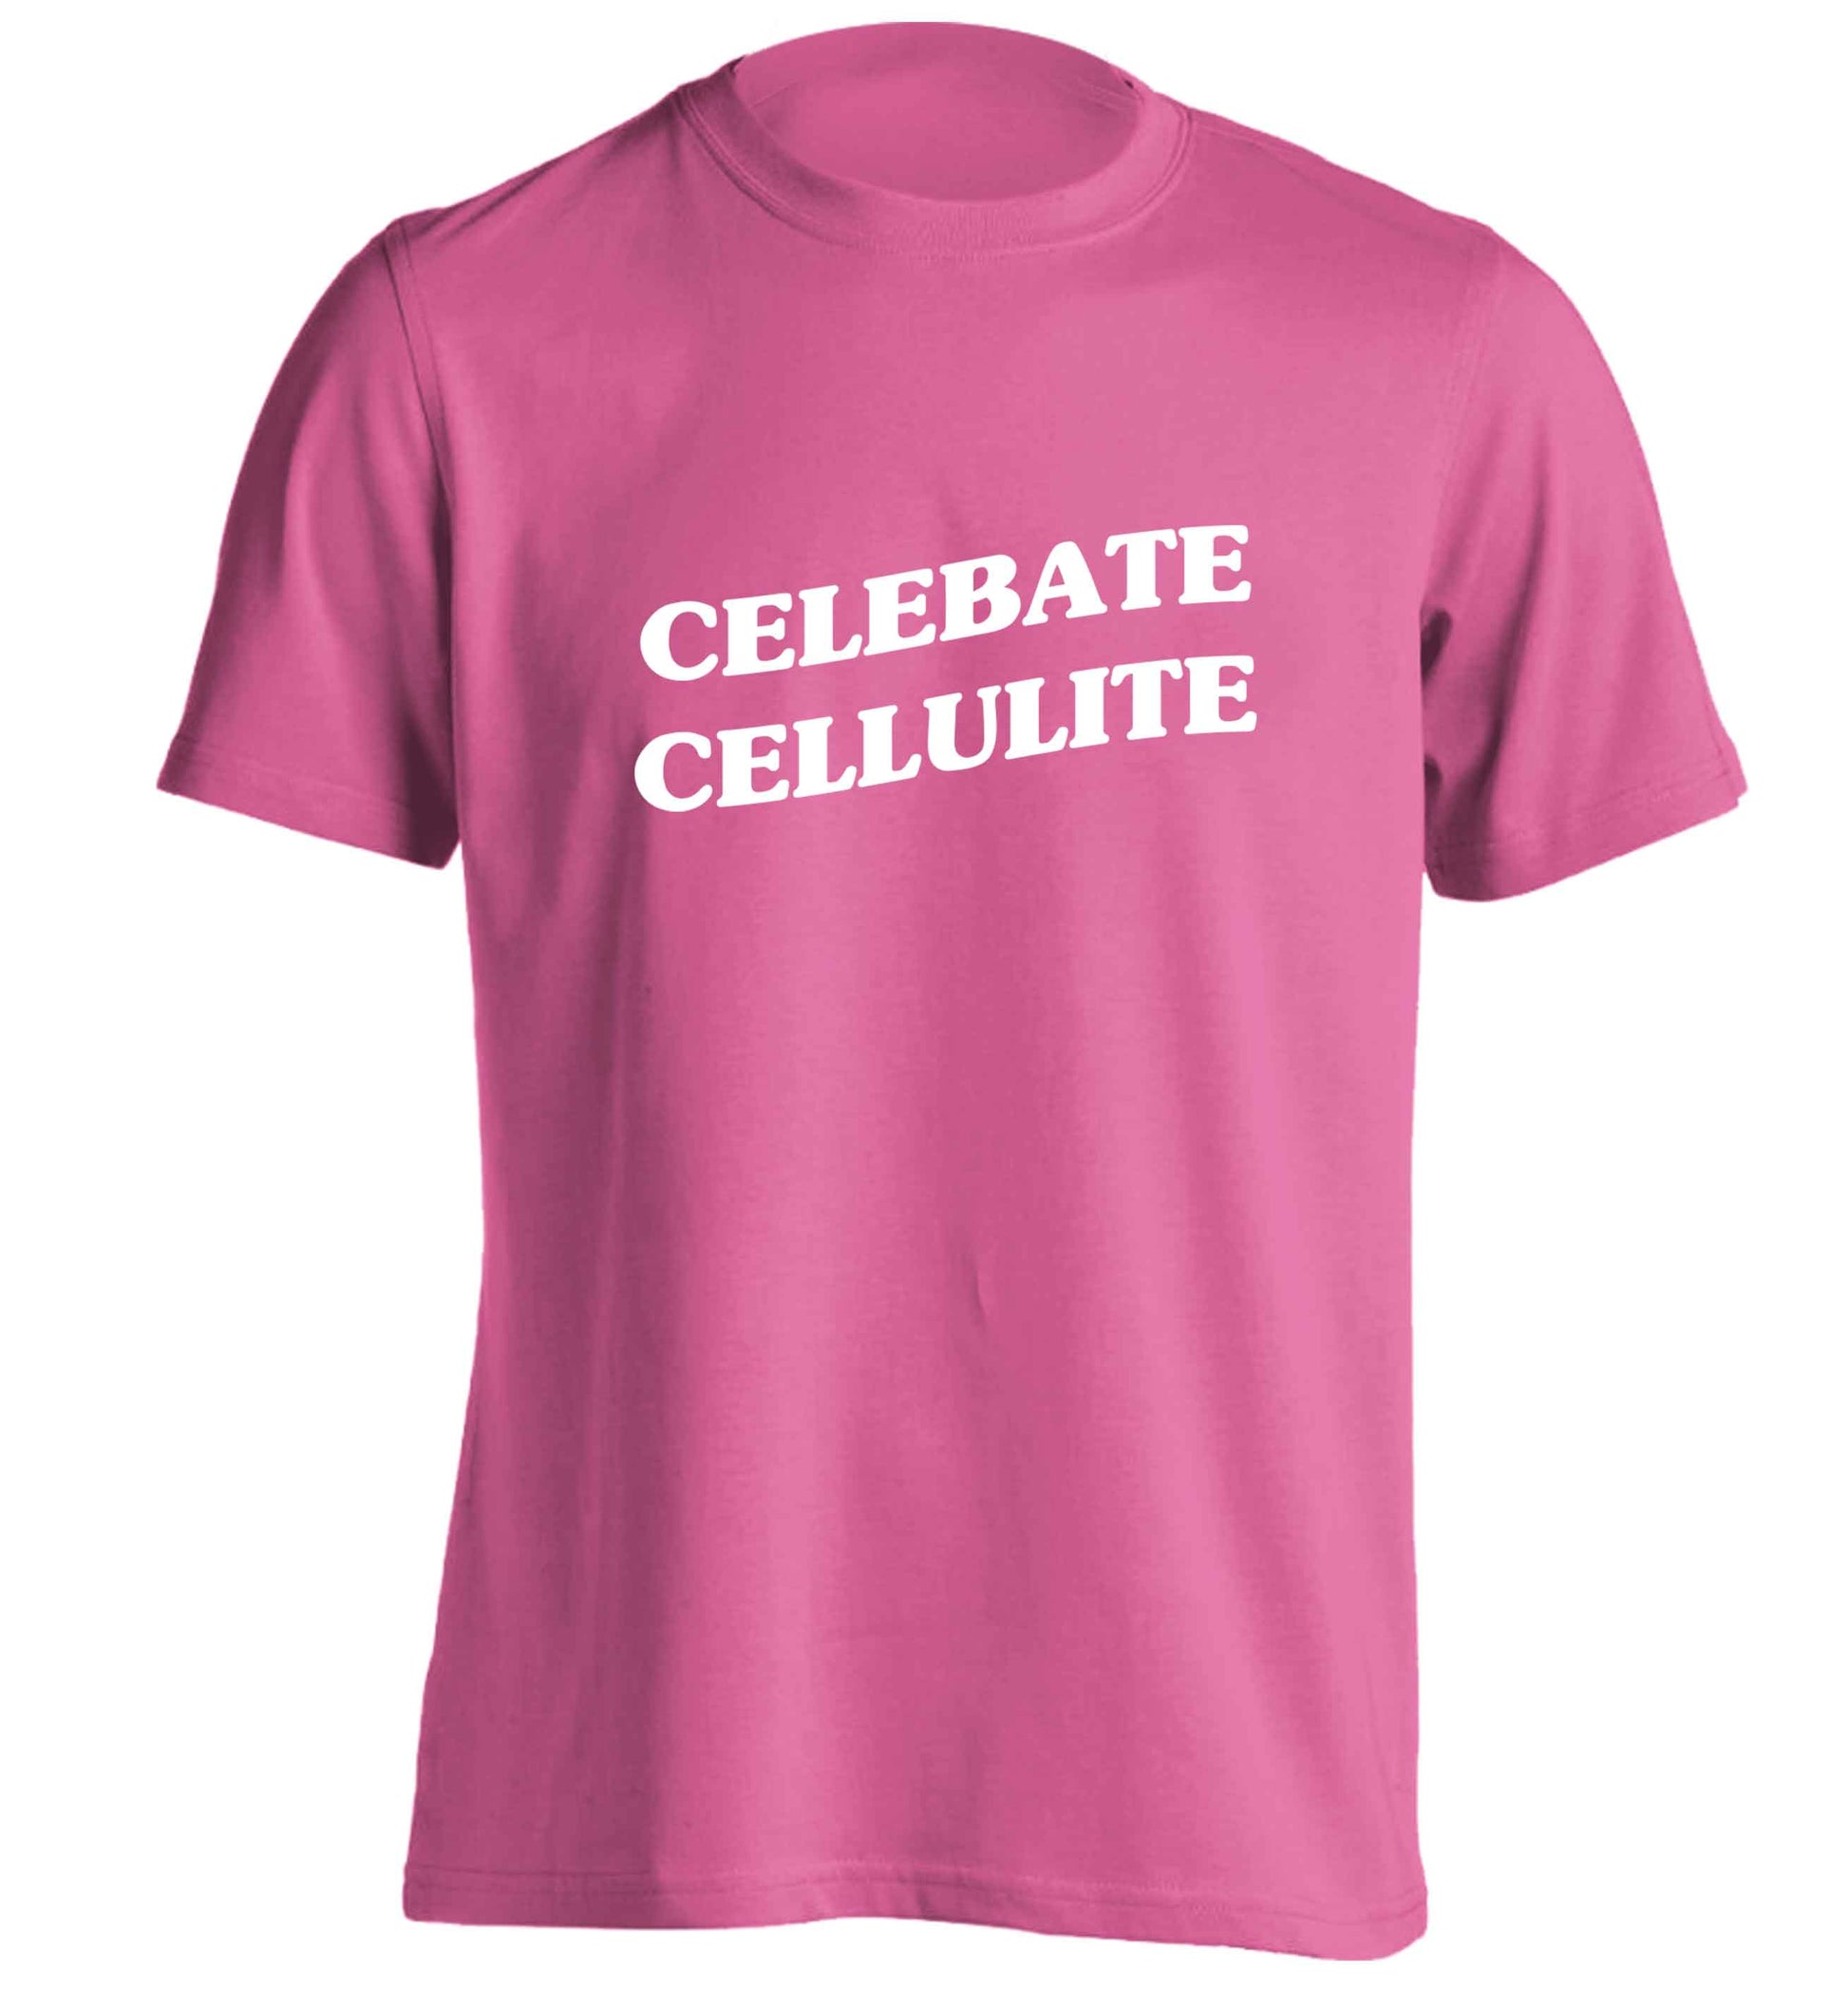 Celebrate cellulite adults unisex pink Tshirt 2XL